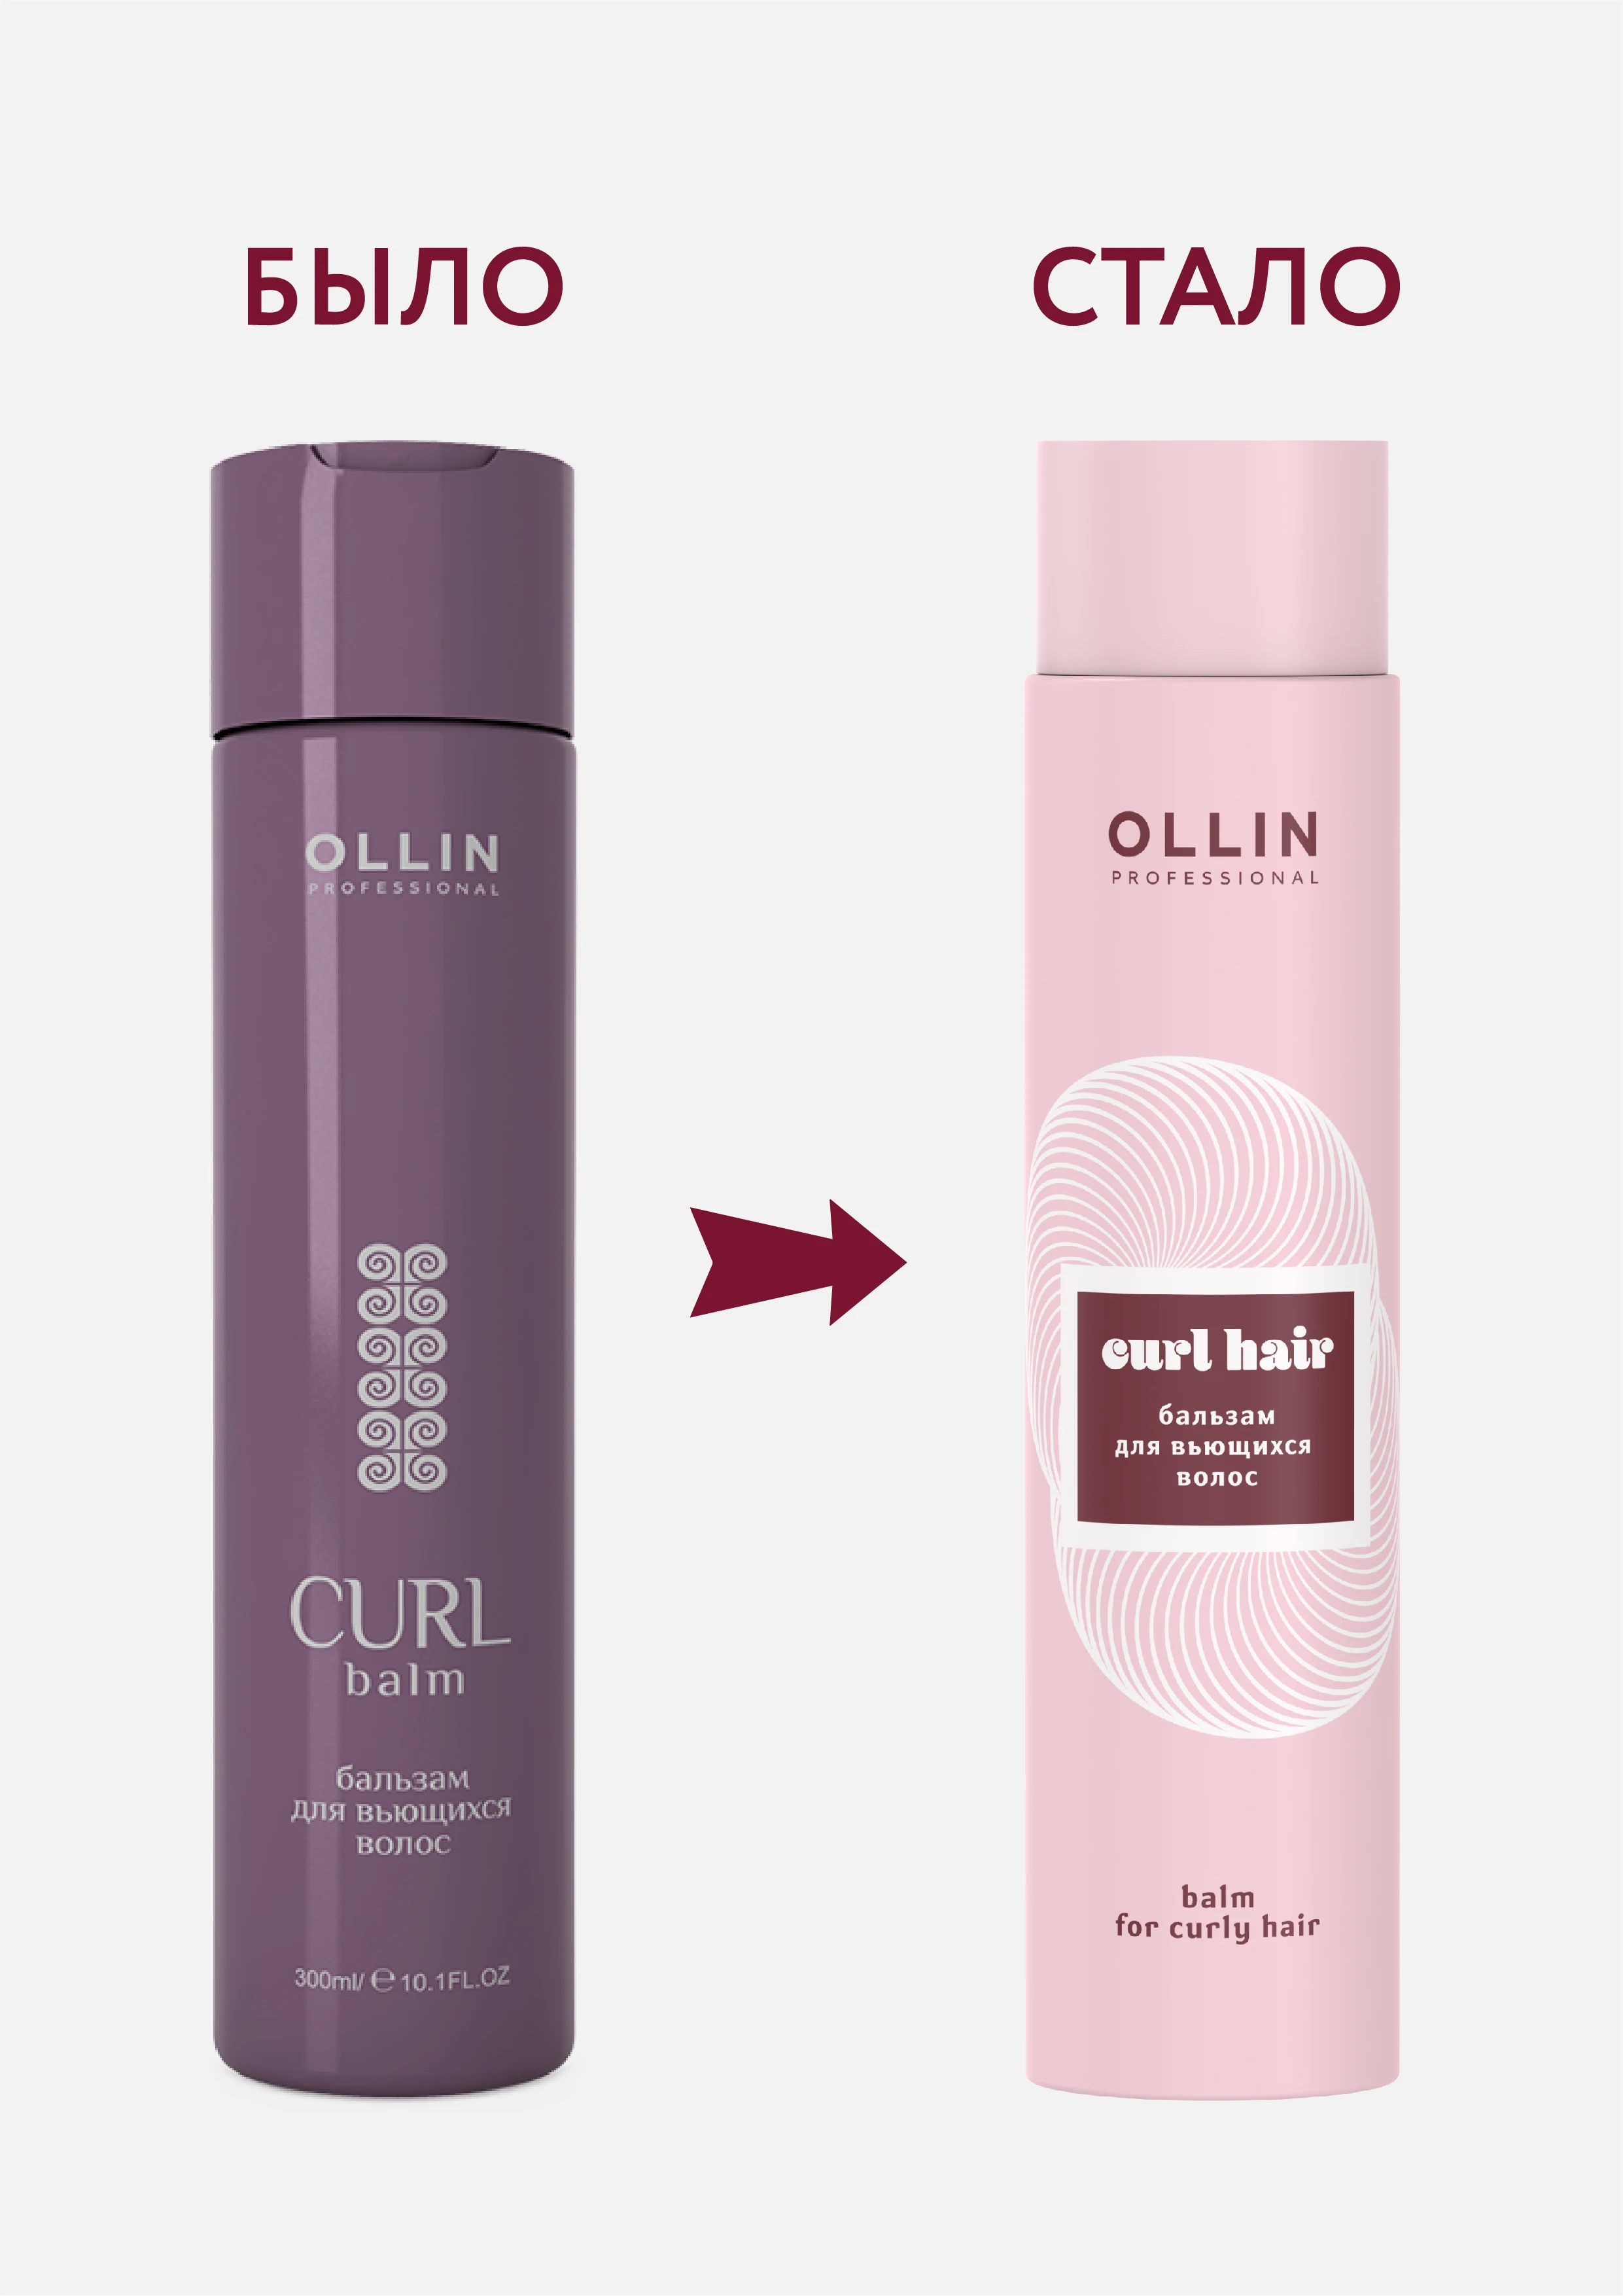 Ollin curl. Ollin Curl hair бальзам для вьющихся волос, 300 мл, Оллин. Ollin Curl hair шампунь для вьющихся волос. Шампунь Ollin professional Curl, для вьющихся волос, 300 мл. Ollin бальзам для вьющихся волос / Curl & smooth hair, 300 мл.